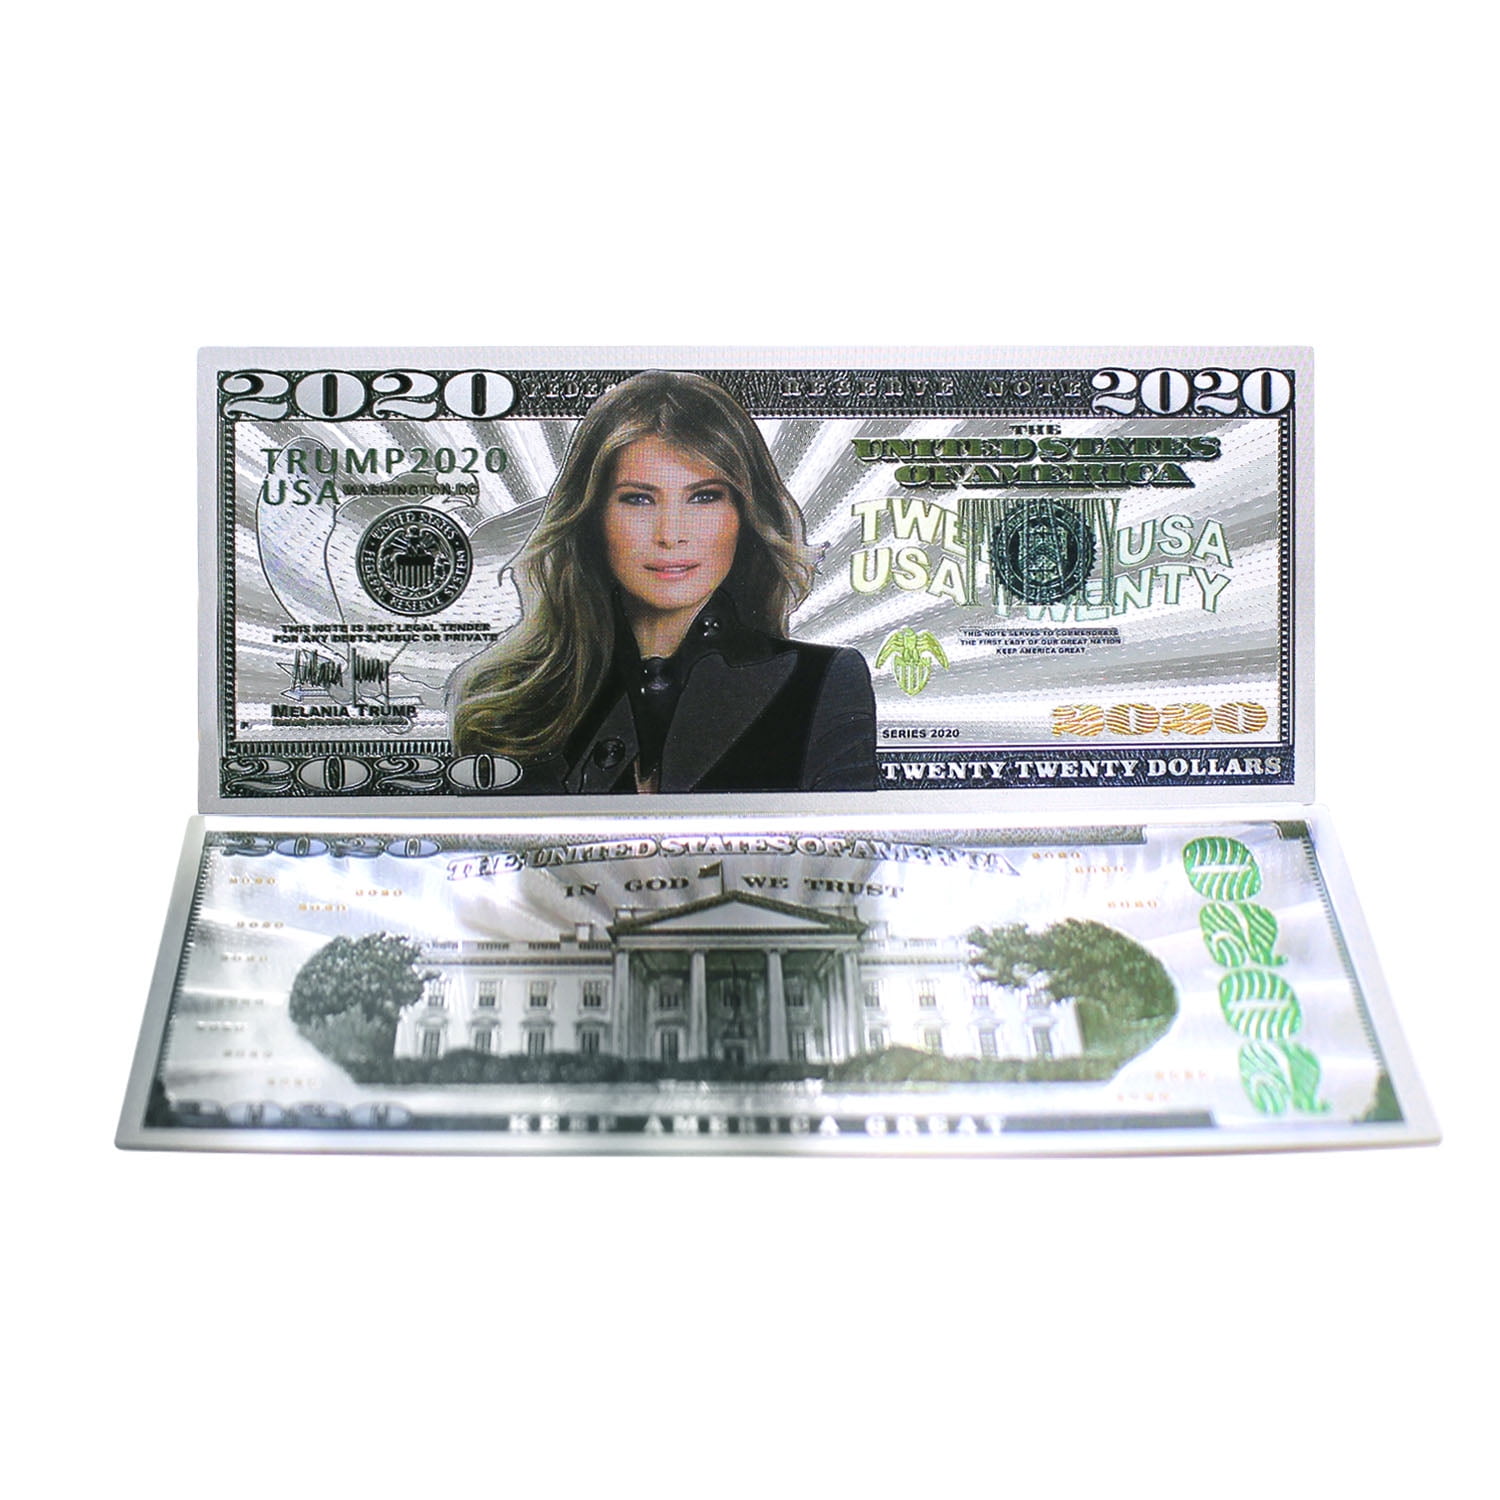 1st Lady Melania Trump Million Dollar Bill Funny Money Novelty Note FREE SLEEVE 